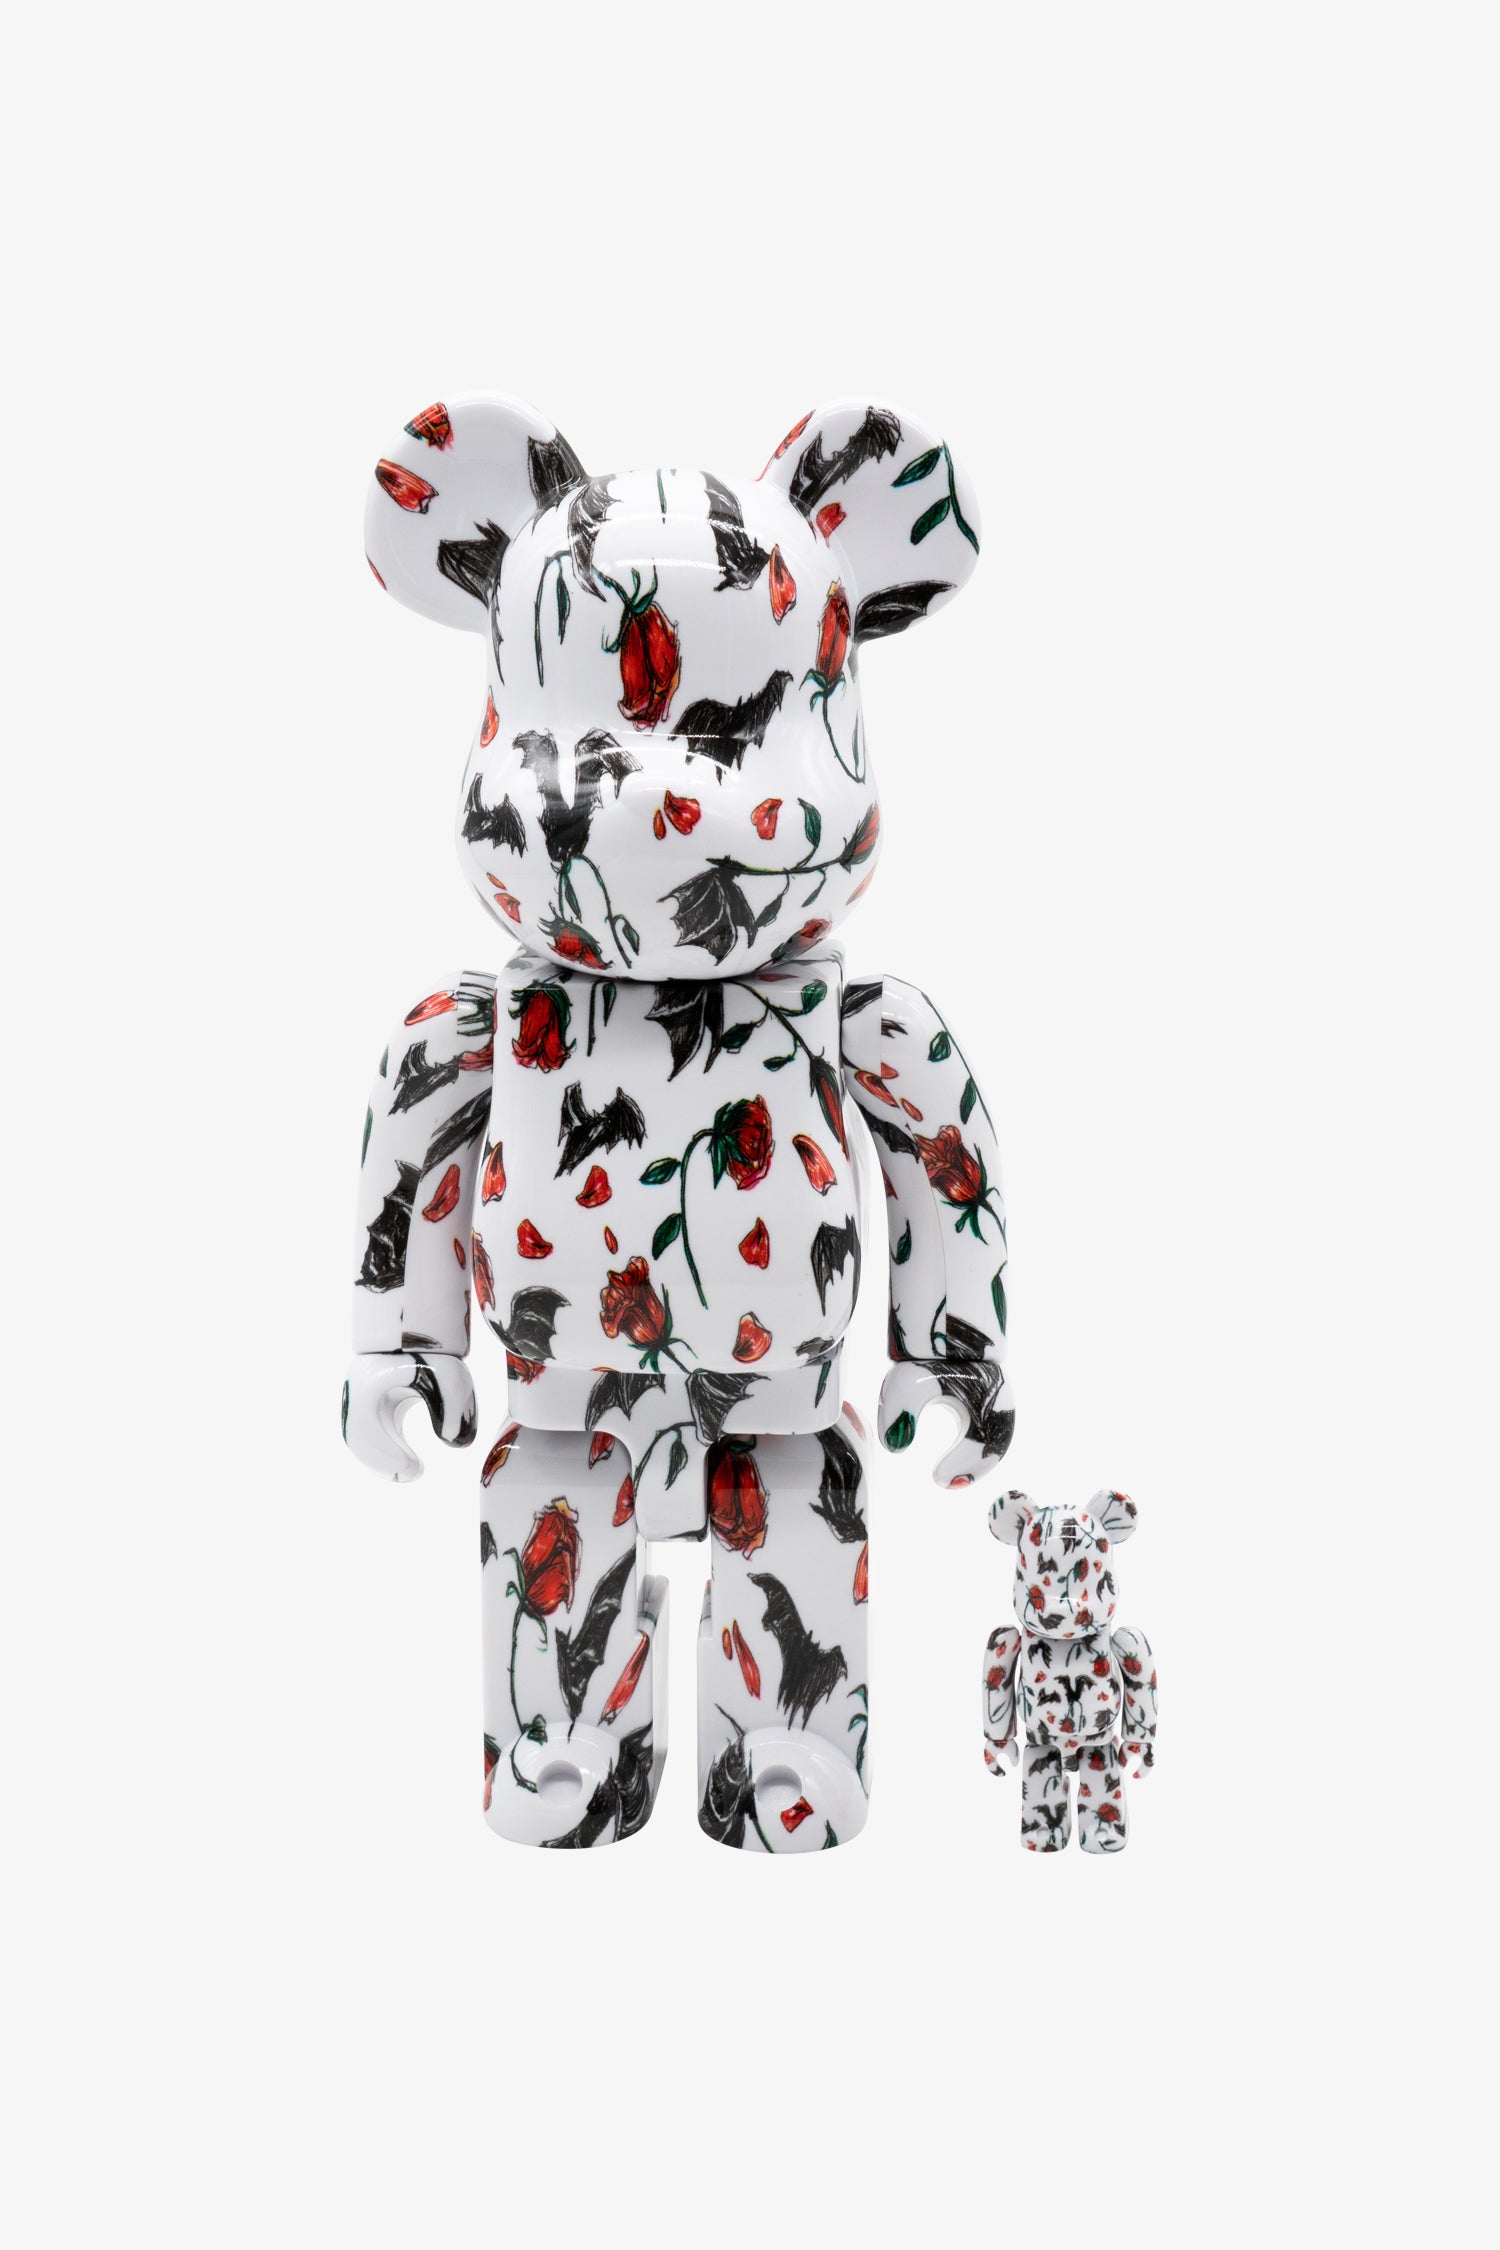 Selectshop FRAME - MEDICOM TOY KIDILL × Eri Wakiyama "Bat & Rose" Be@rbrick 400%+100% Toys Dubai